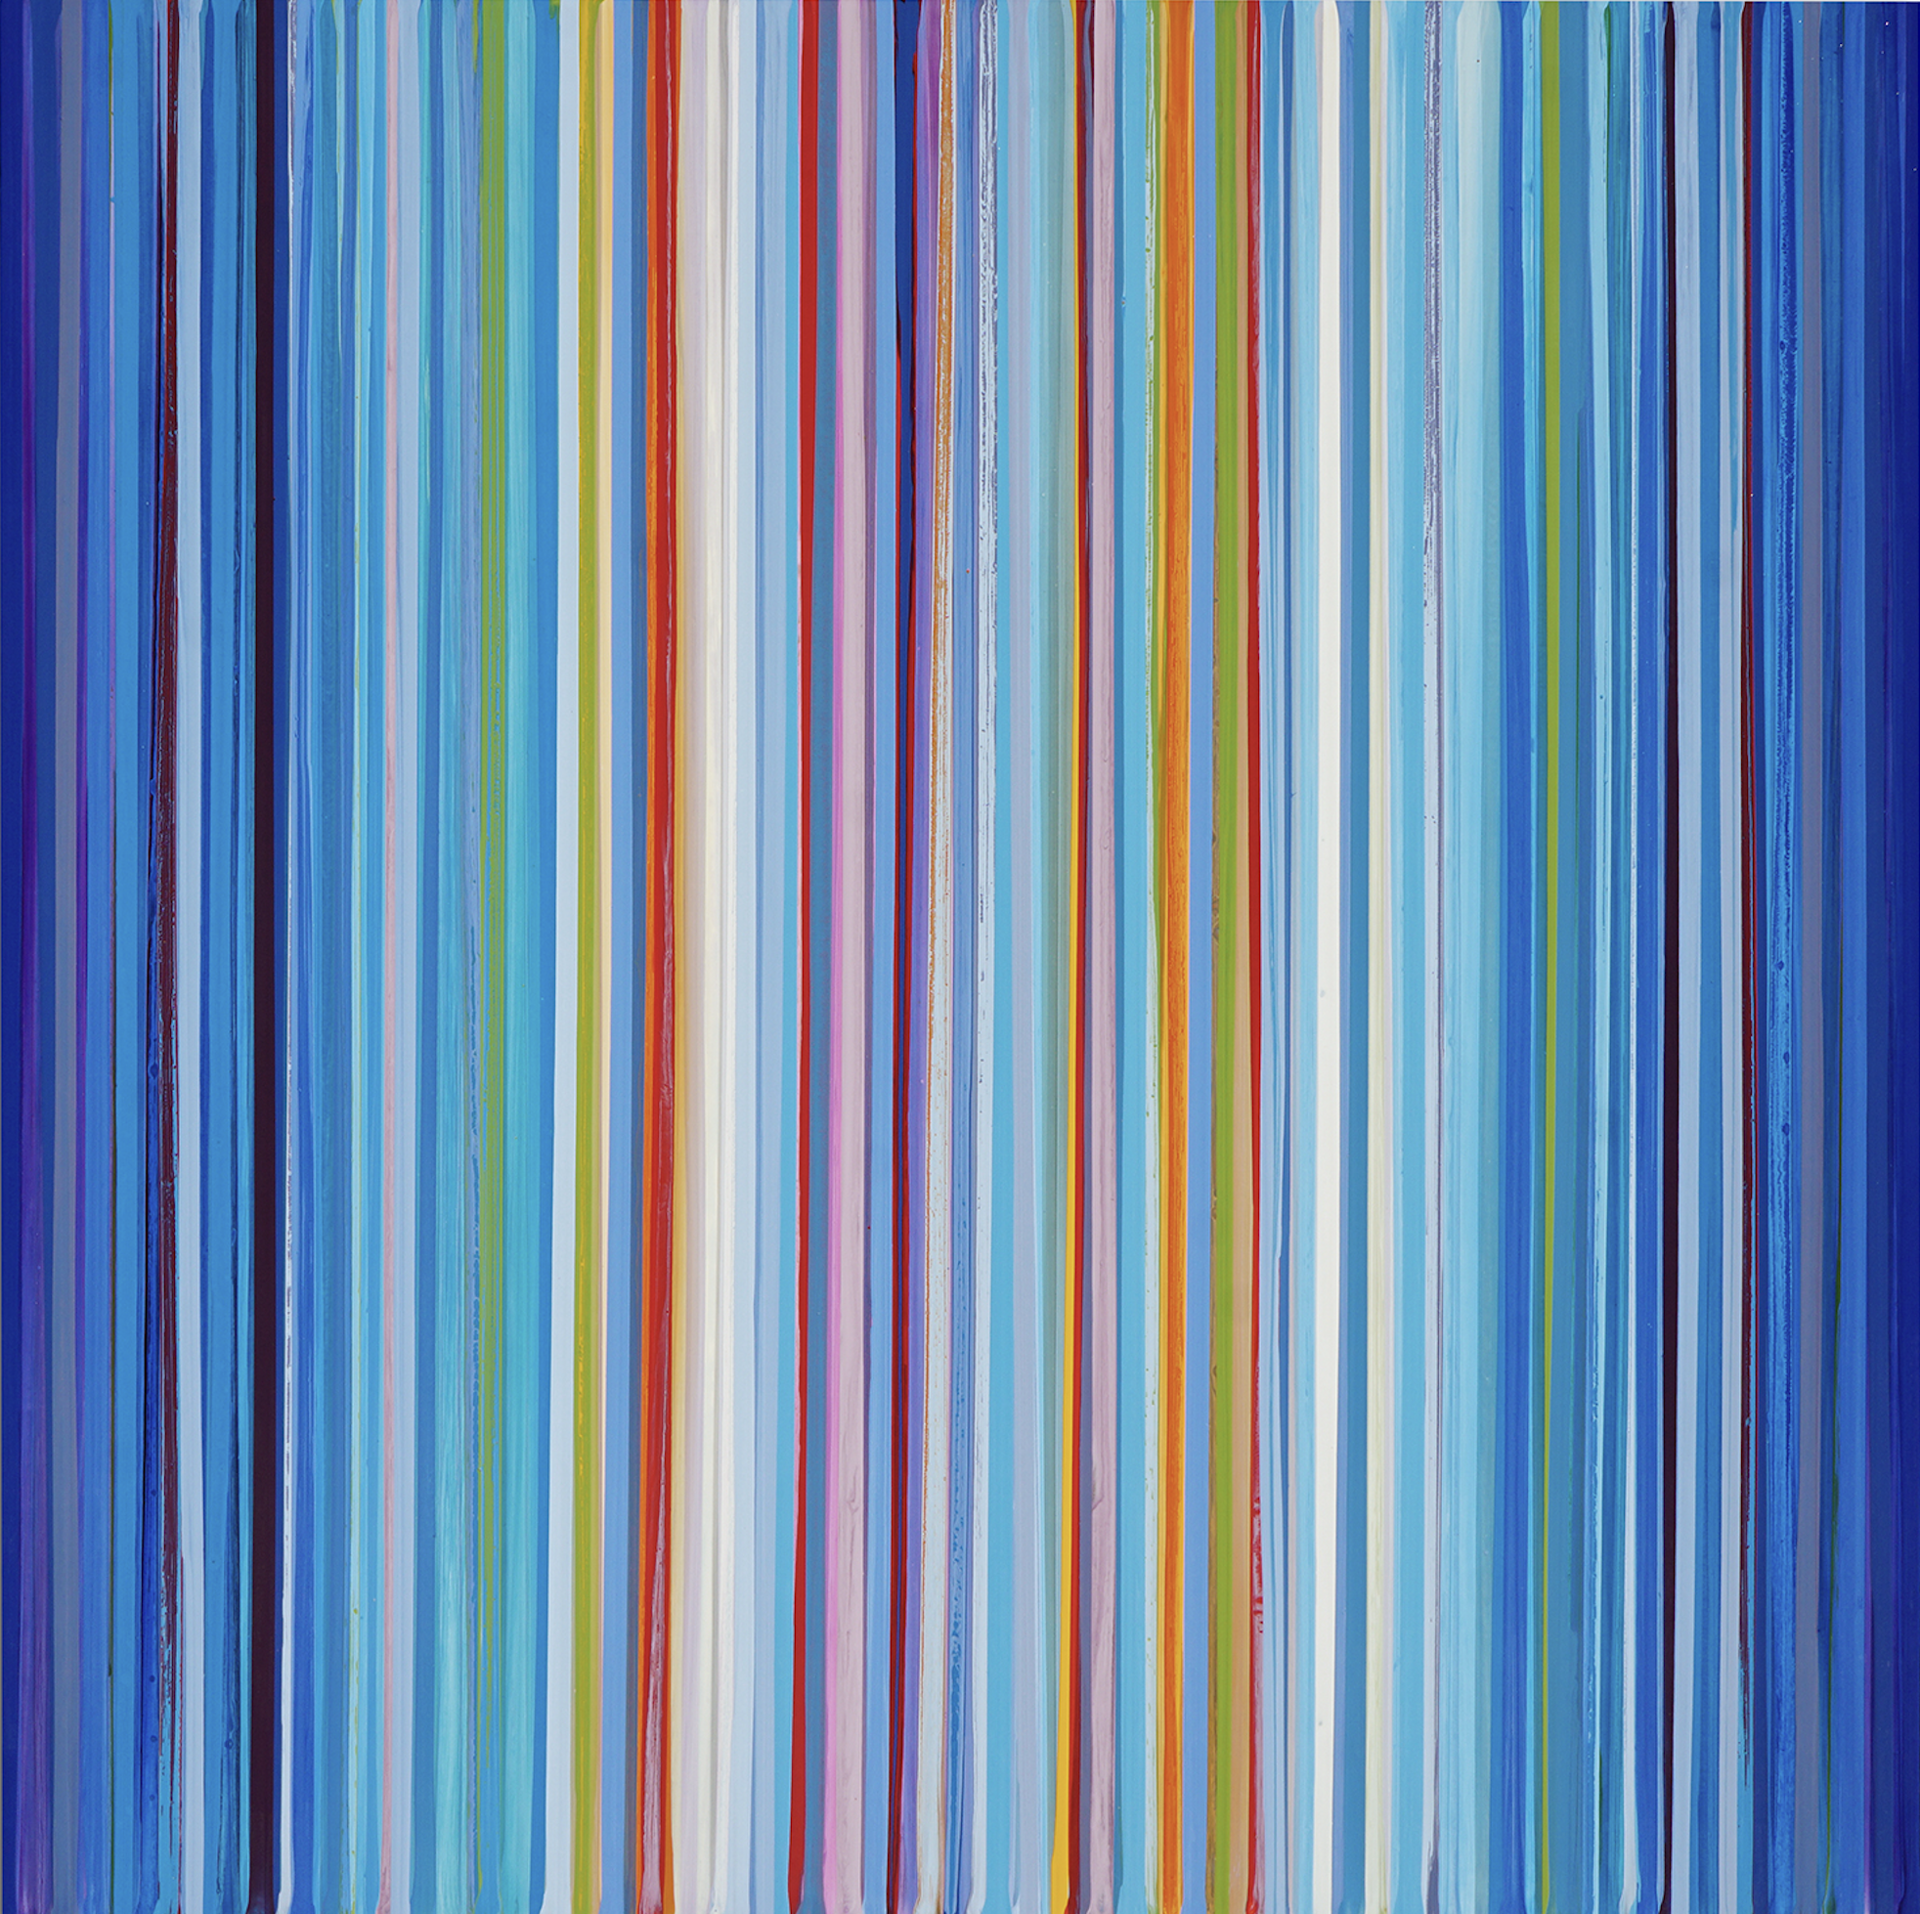 Stripe Spectrum by Michael Hoffman